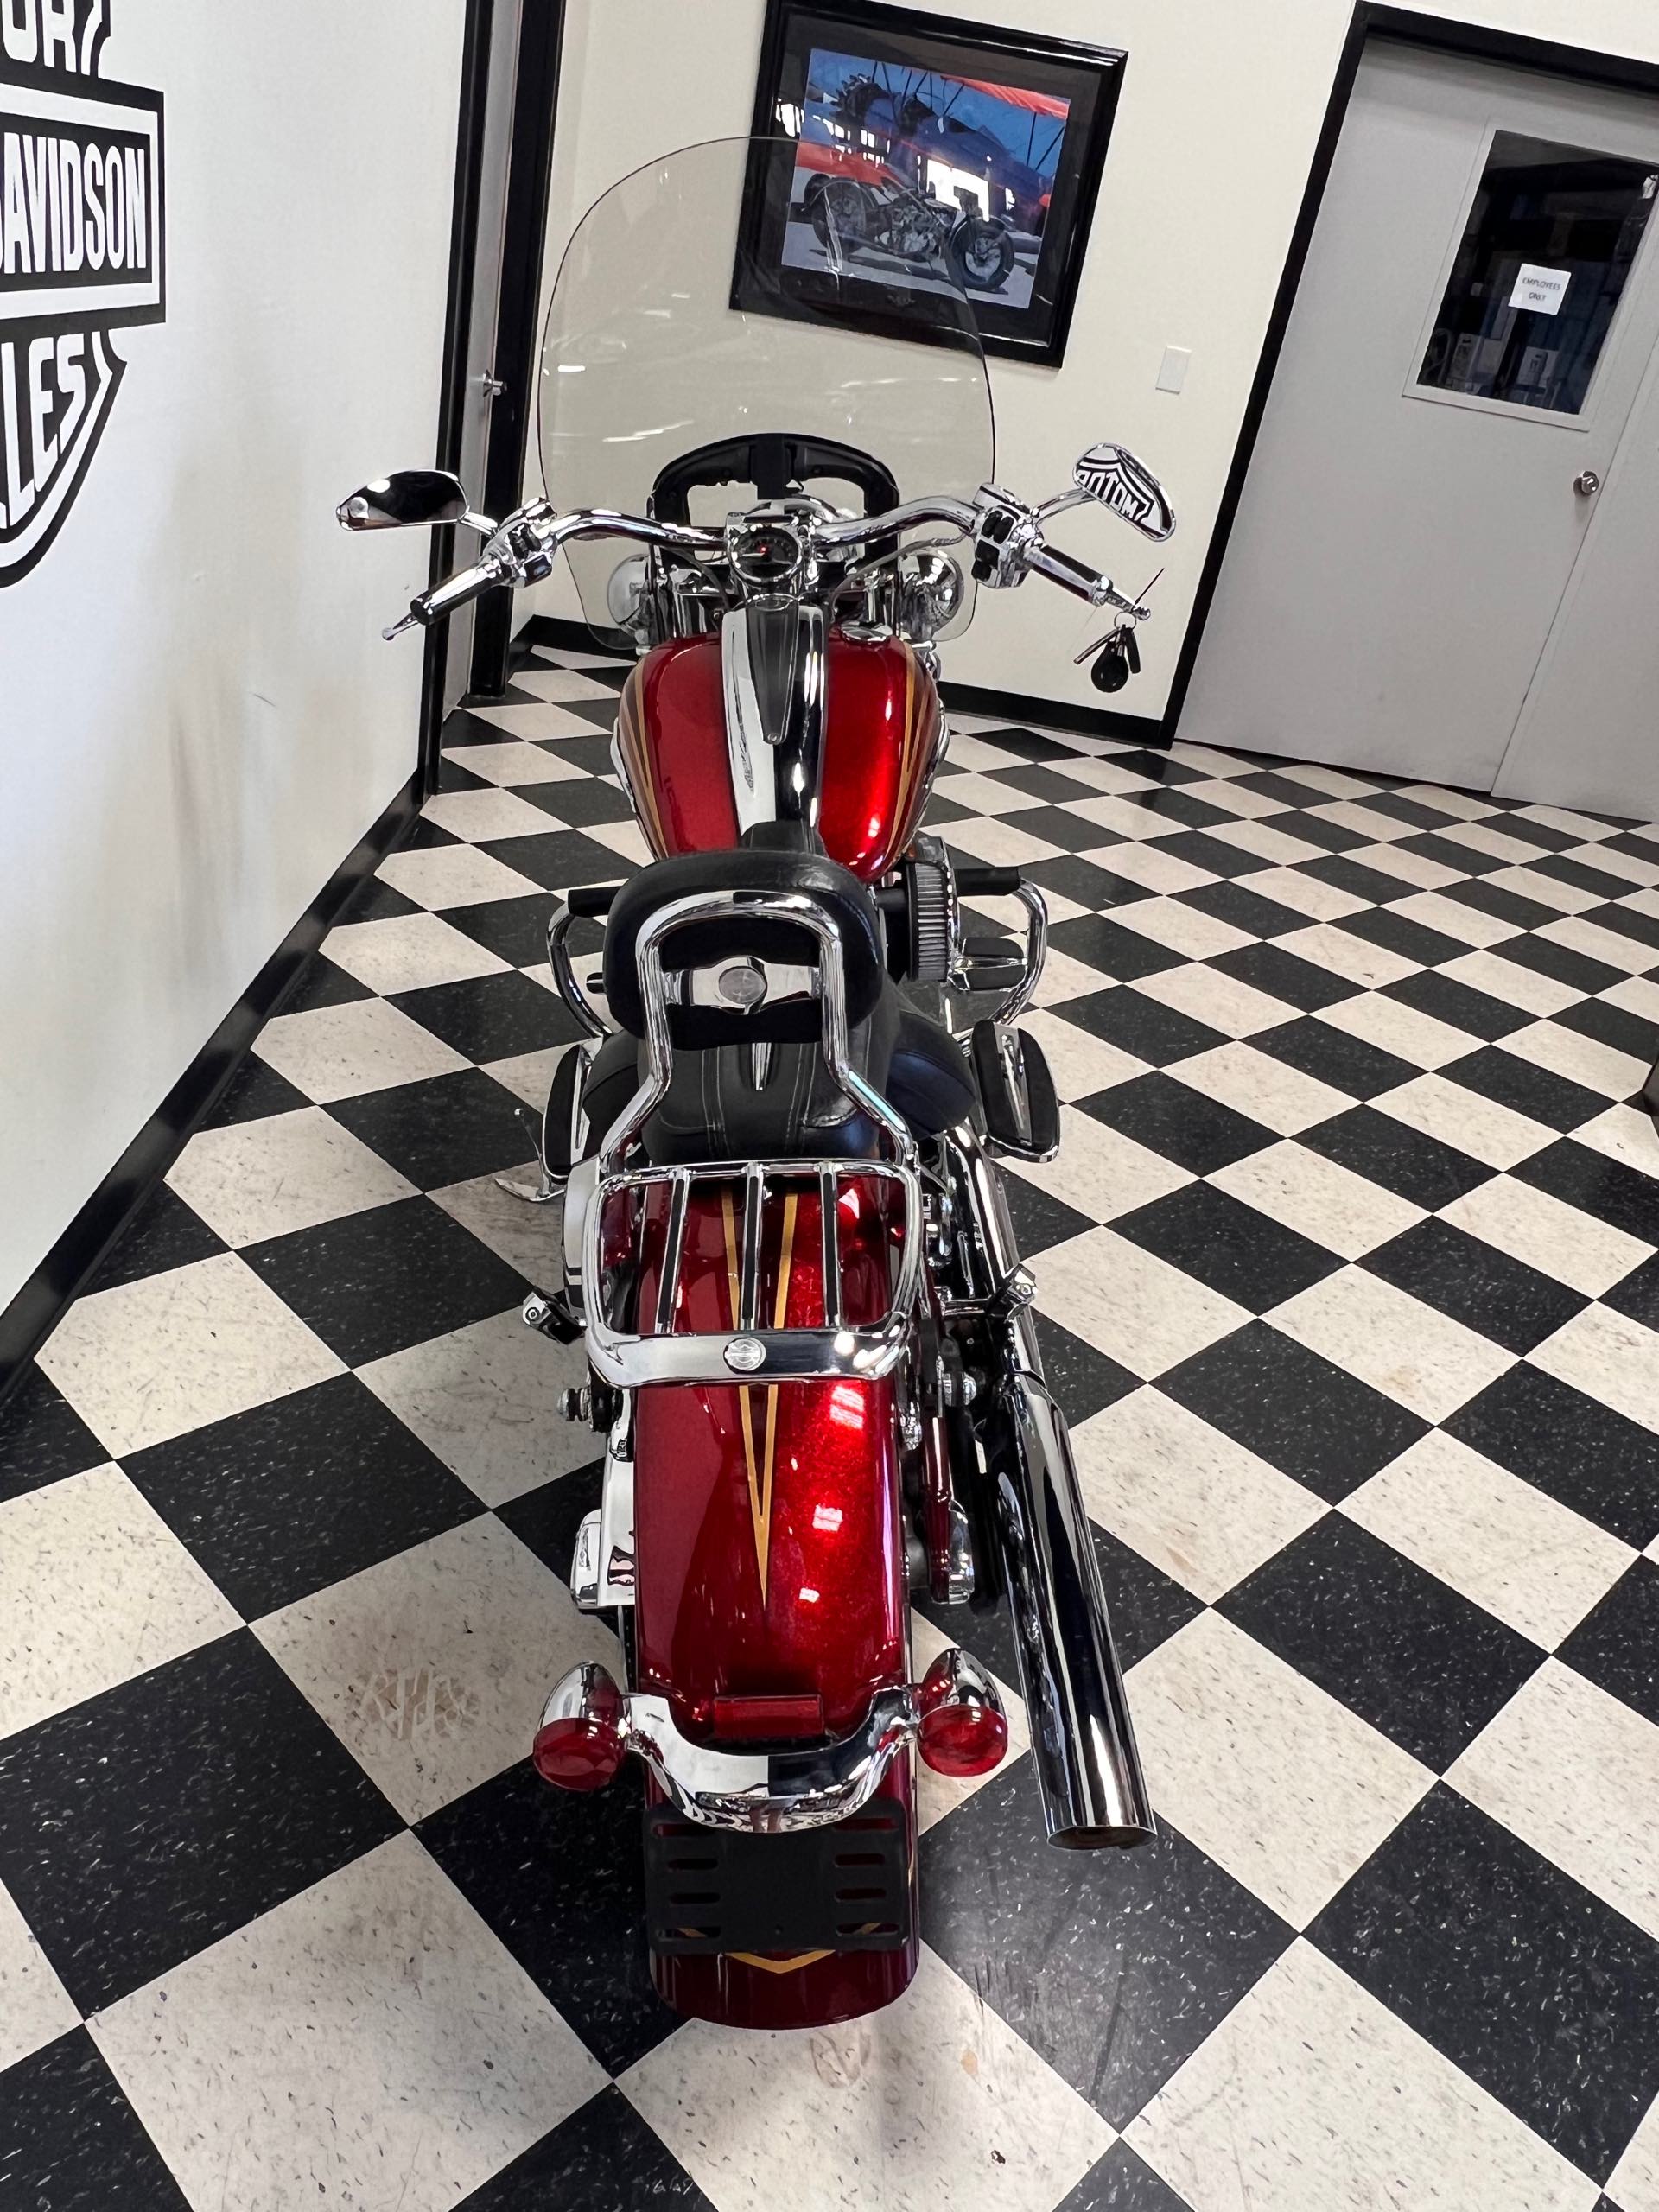 2014 Harley-Davidson Softail CVO Deluxe at Deluxe Harley Davidson